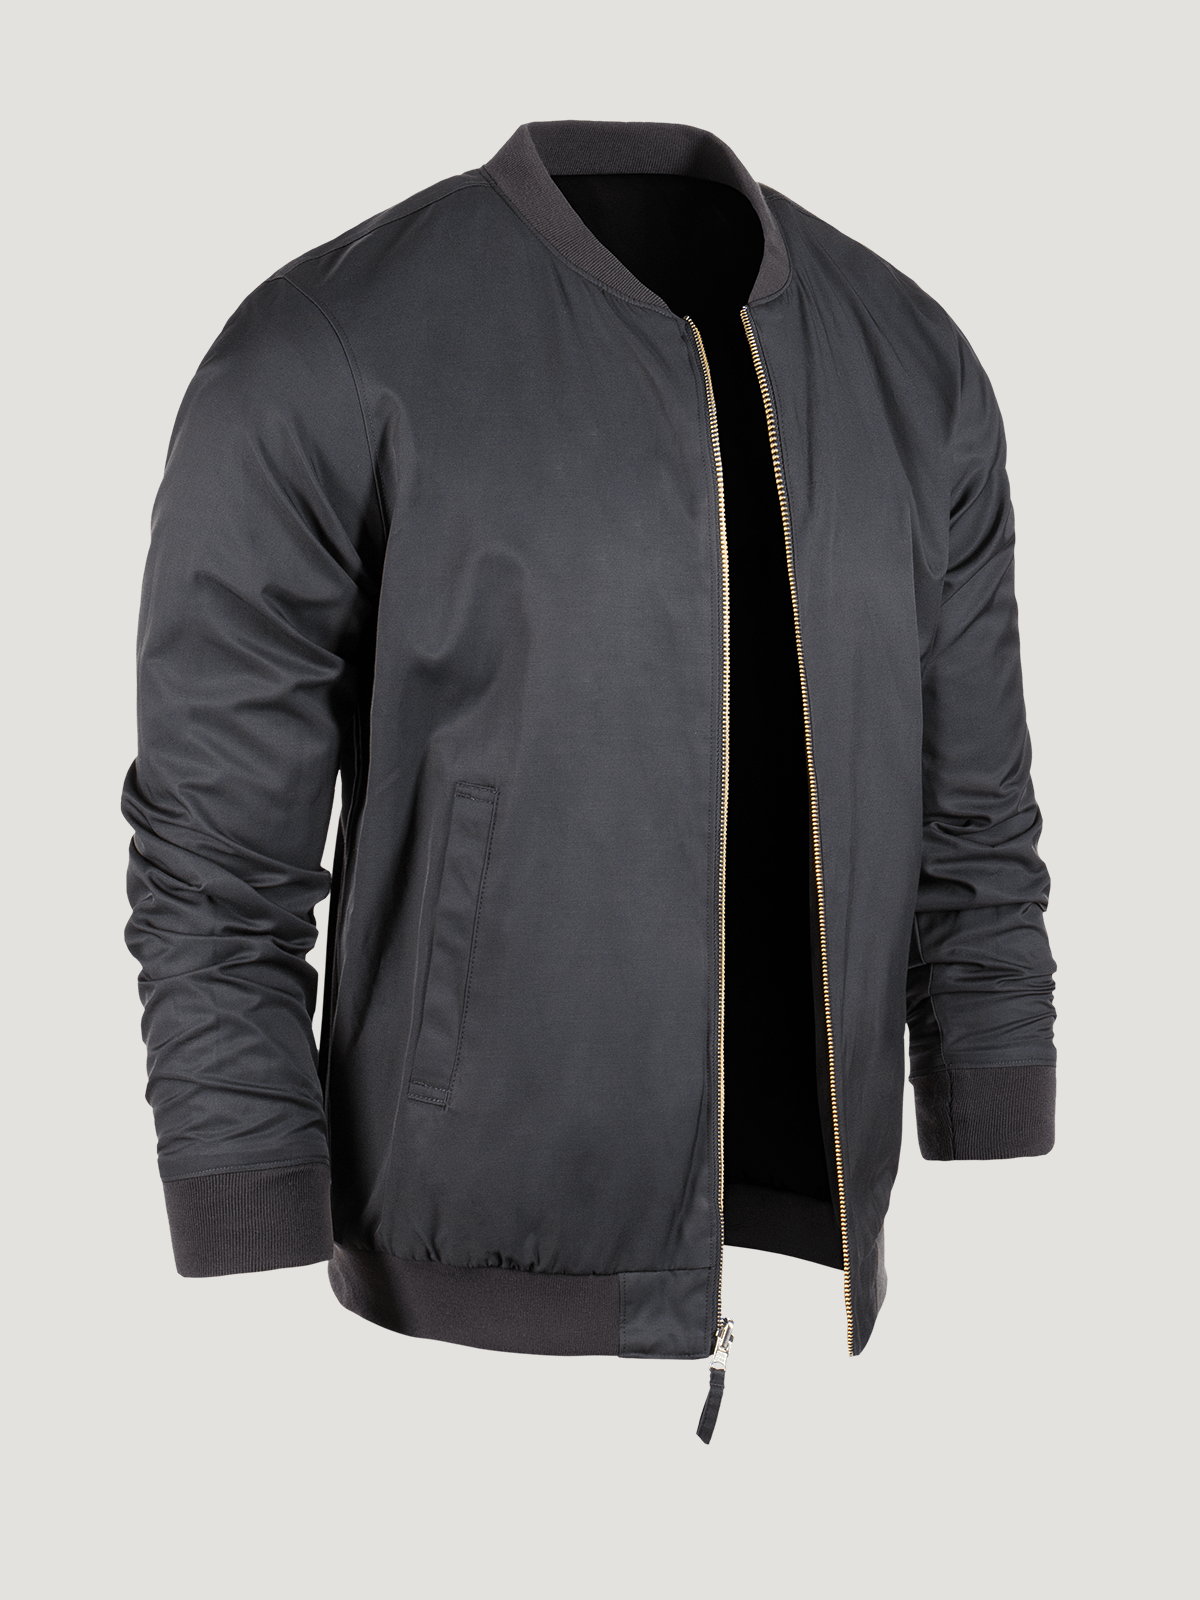 Mens Kenzo metallic Lightweight Reversible Jacket | Harrods # {CountryCode}-thanhphatduhoc.com.vn